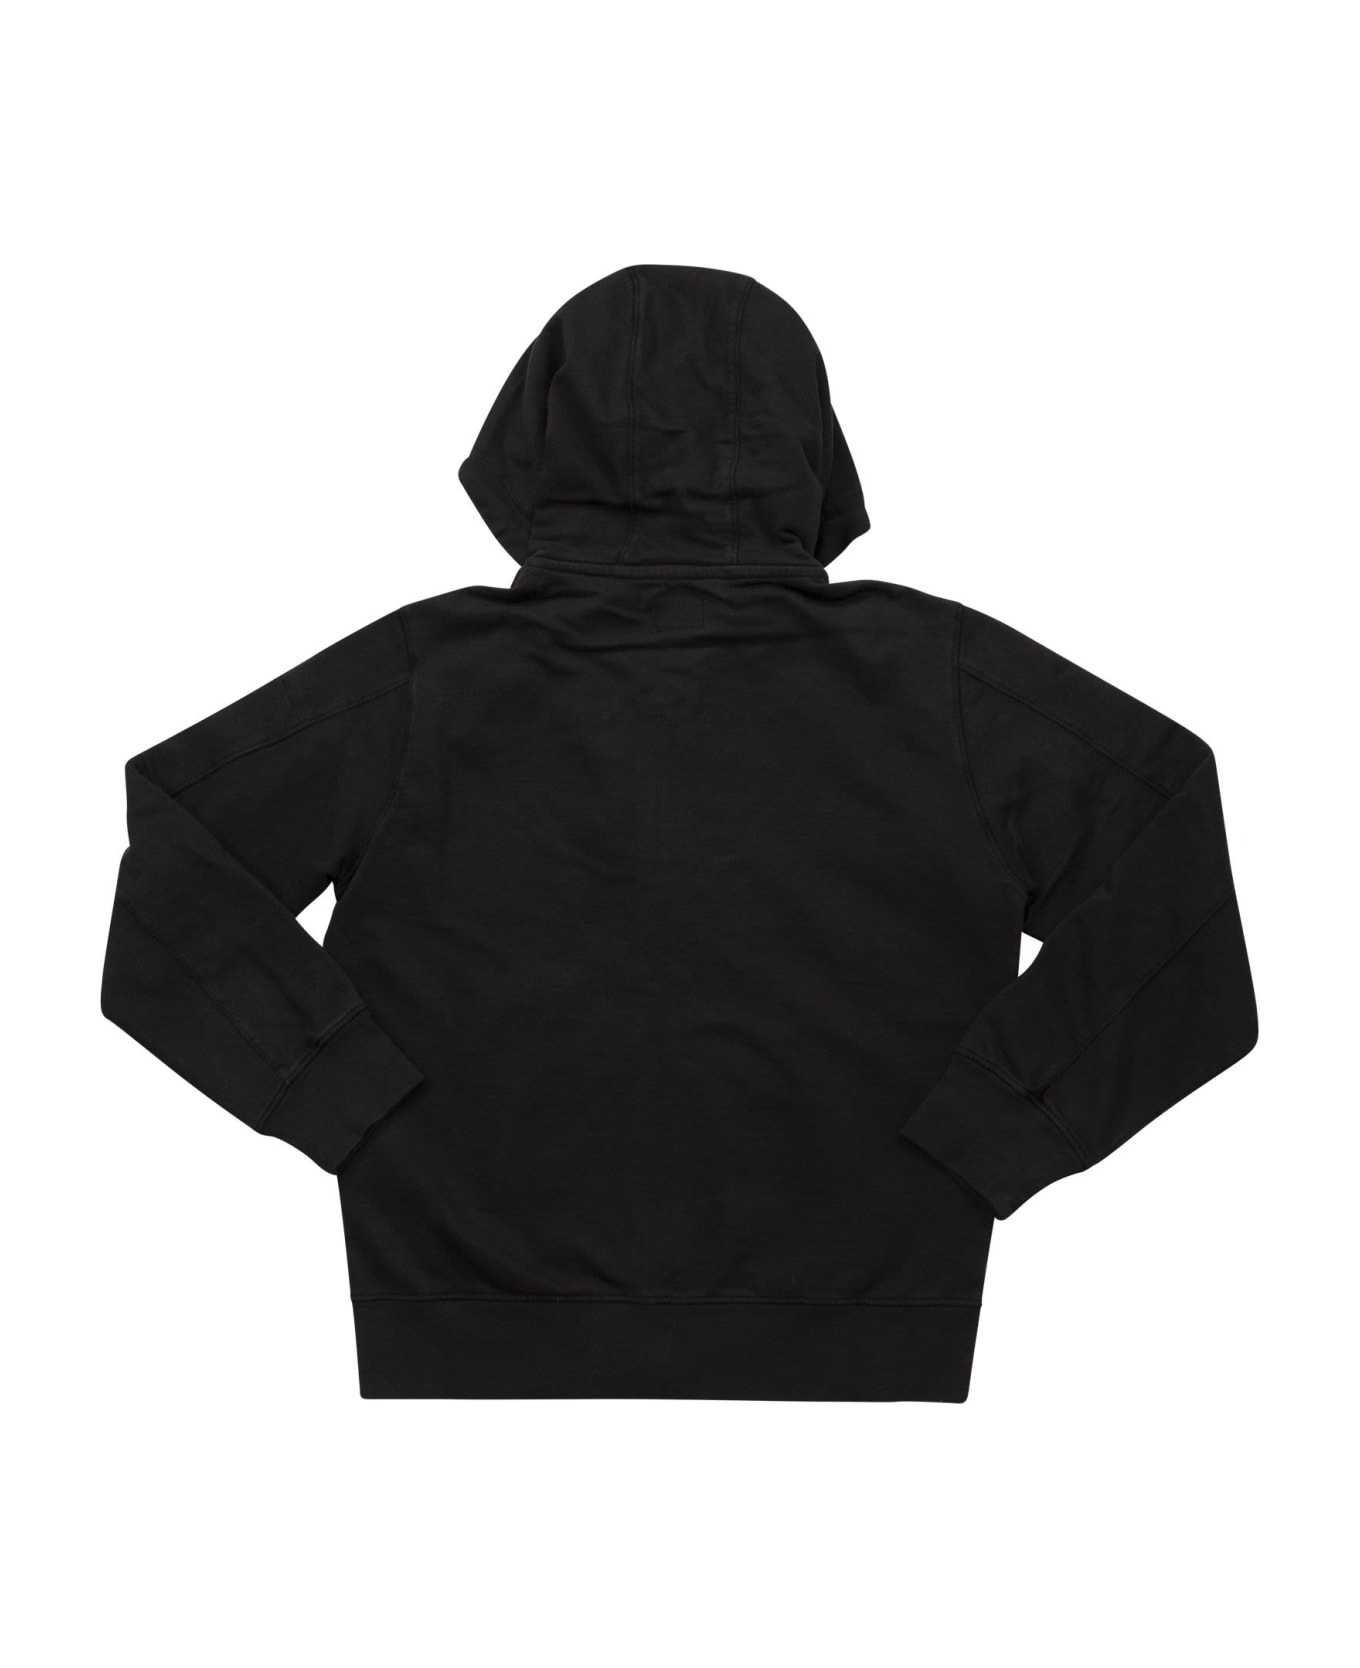 C.P. Company Hooded Sweatshirt - Black